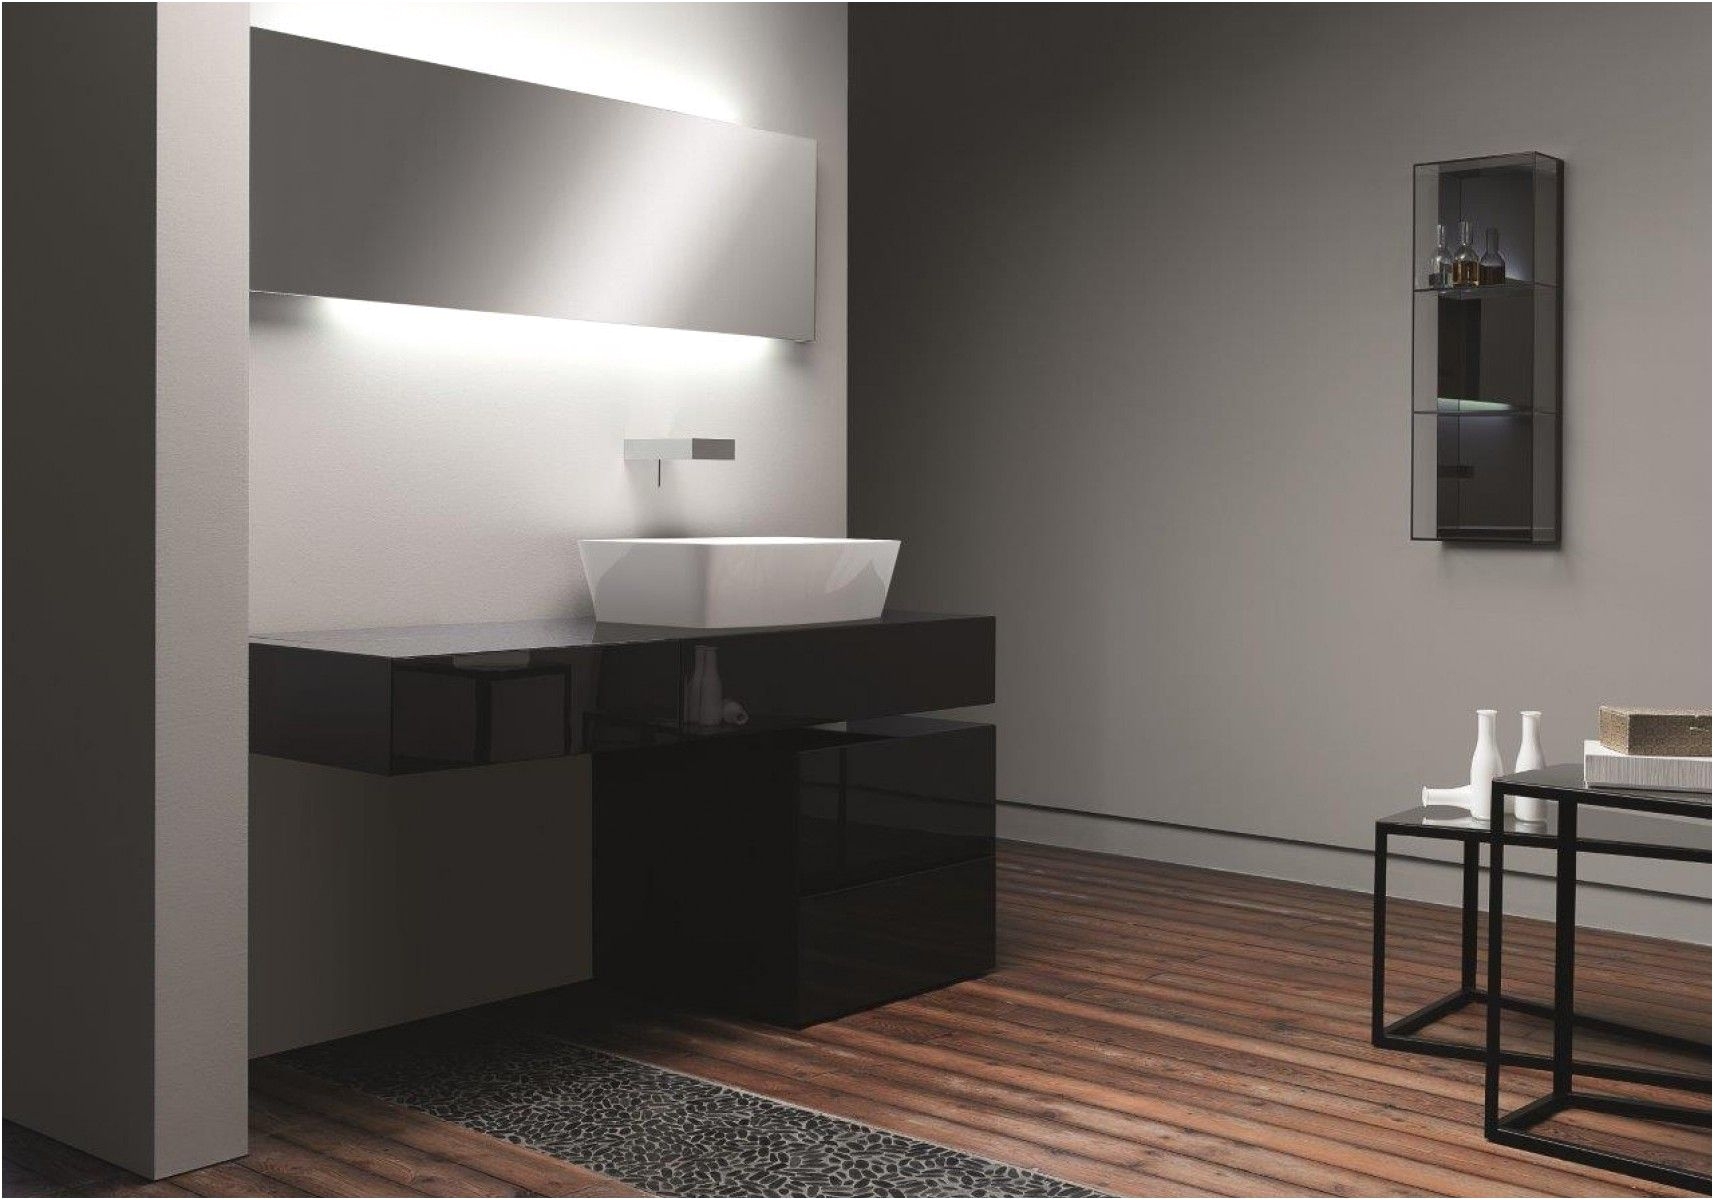 Engaging Italian Bathroom Tiles Within Ultra Modern Italian Bathroom Design From Italian Bathroom Designs